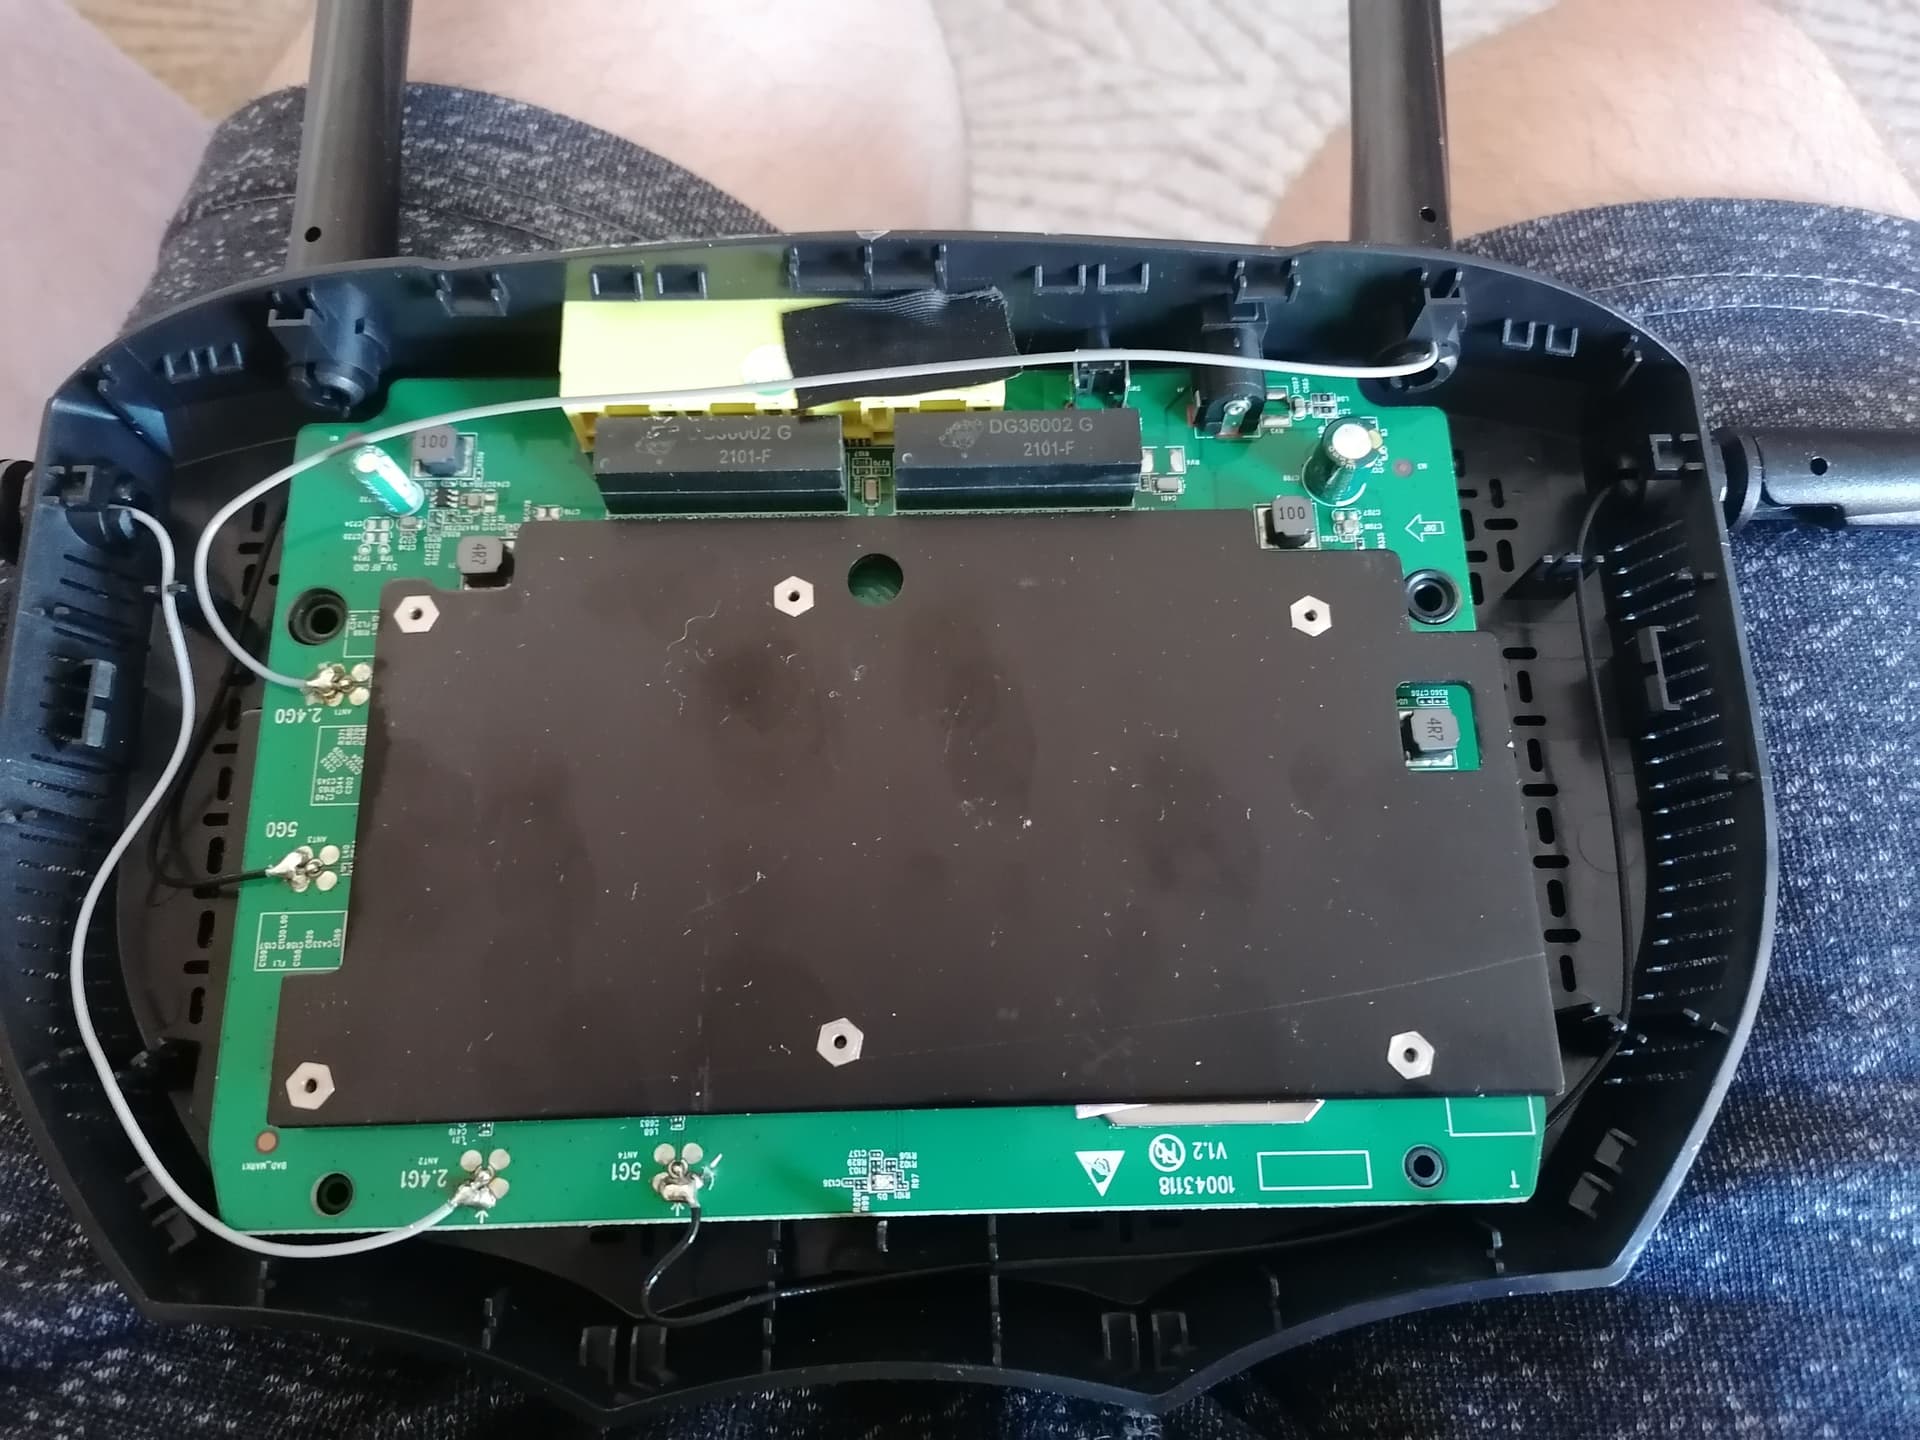 Teardown: Inside the TP-Link Archer C7 wireless router